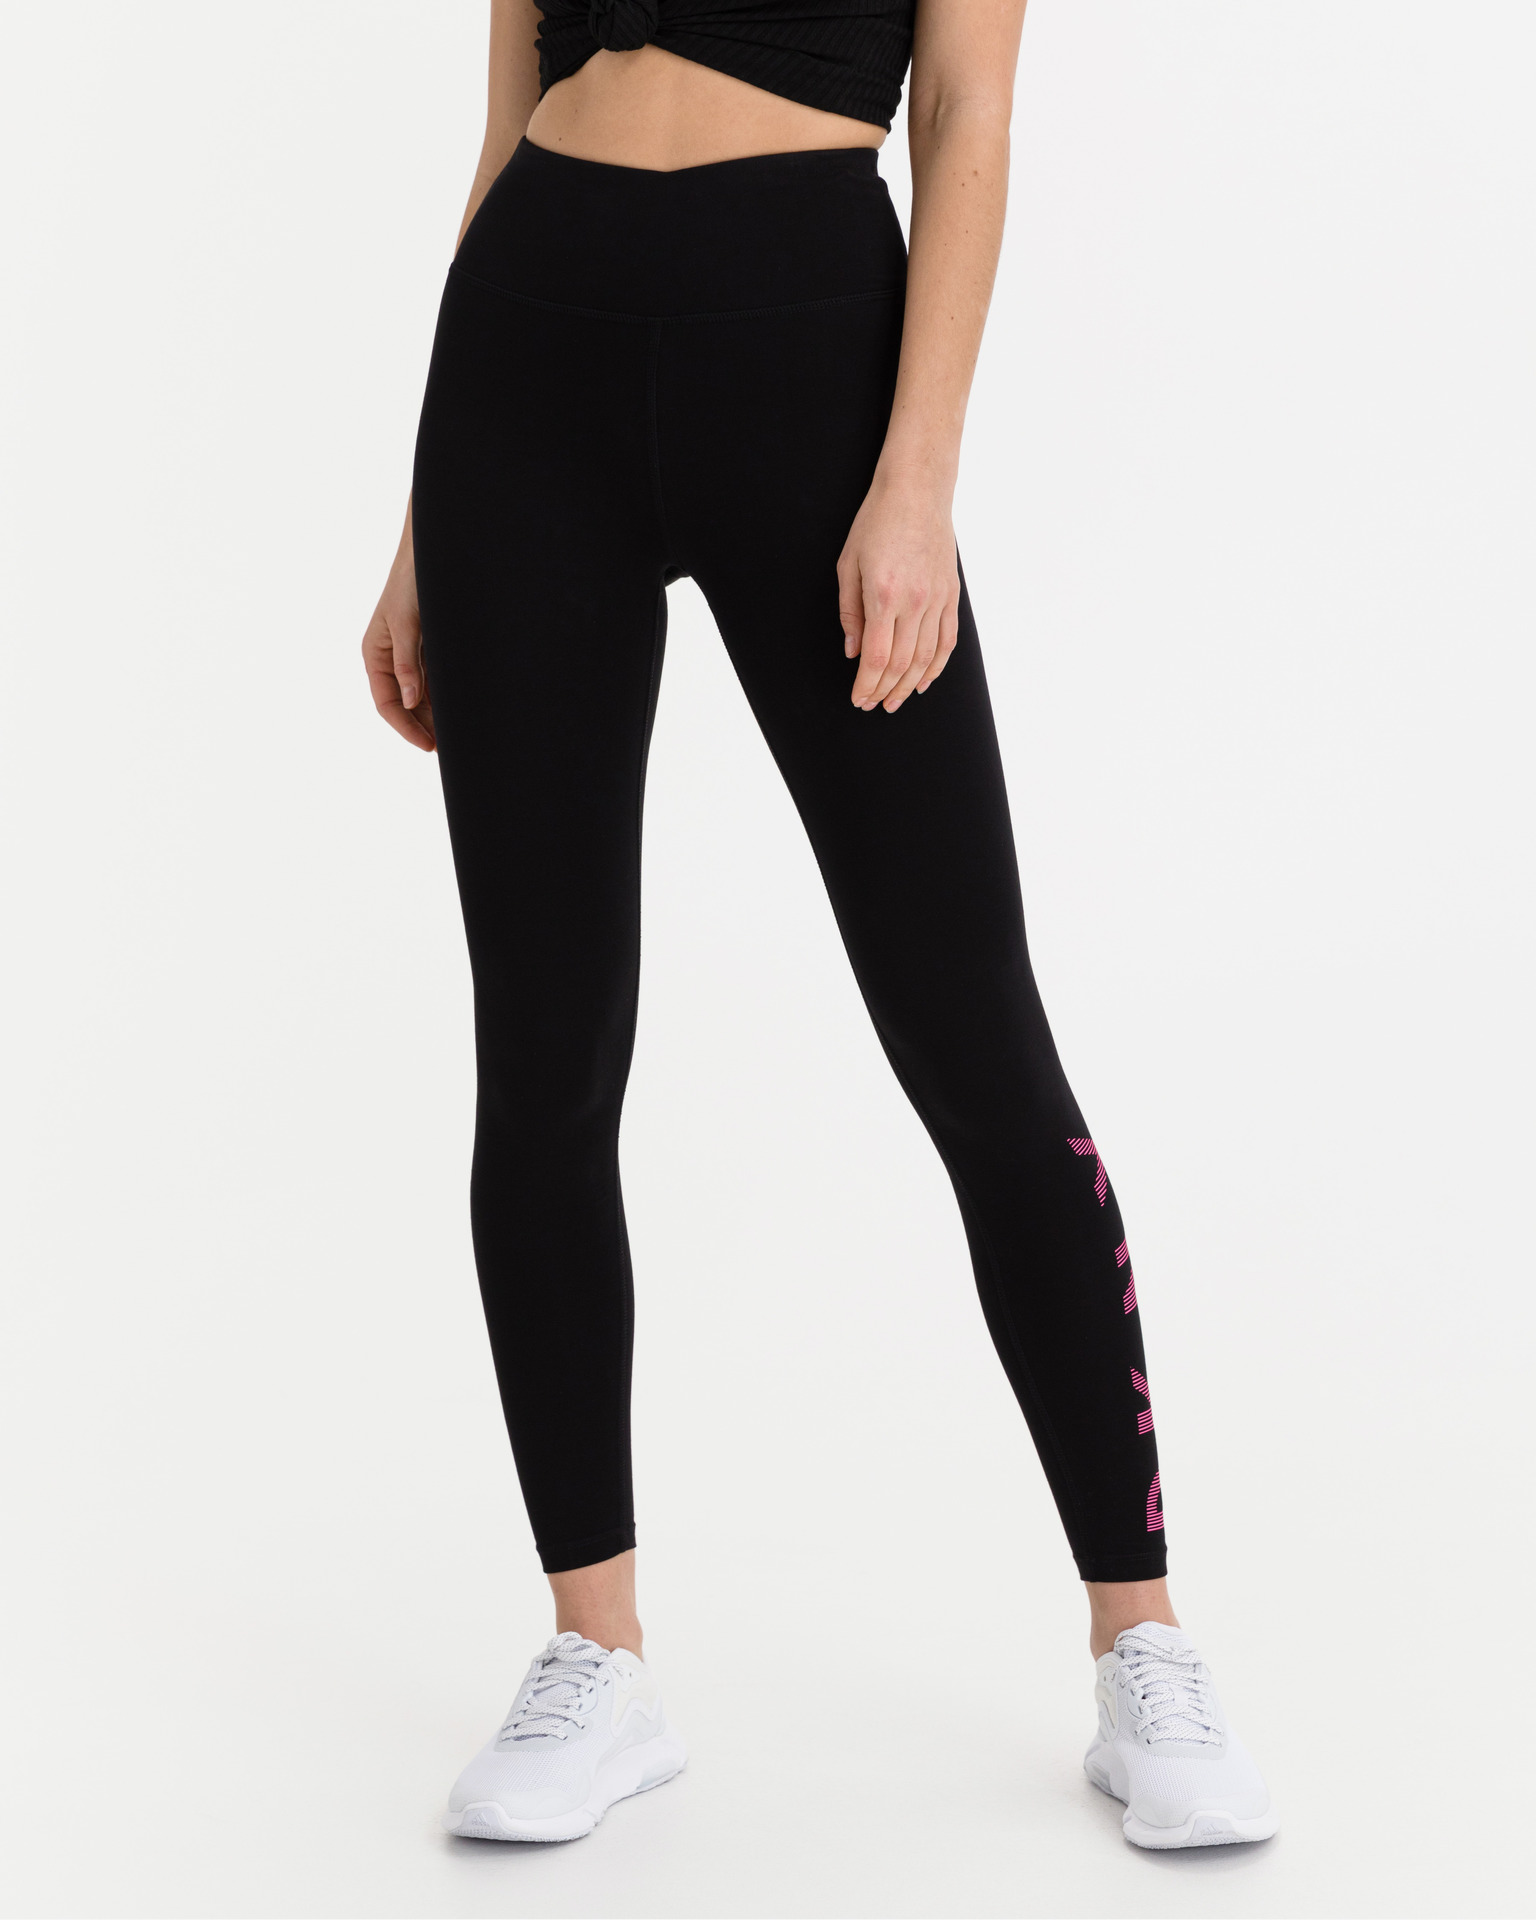 DKNY Womens Tight Printed Fitness Leggings